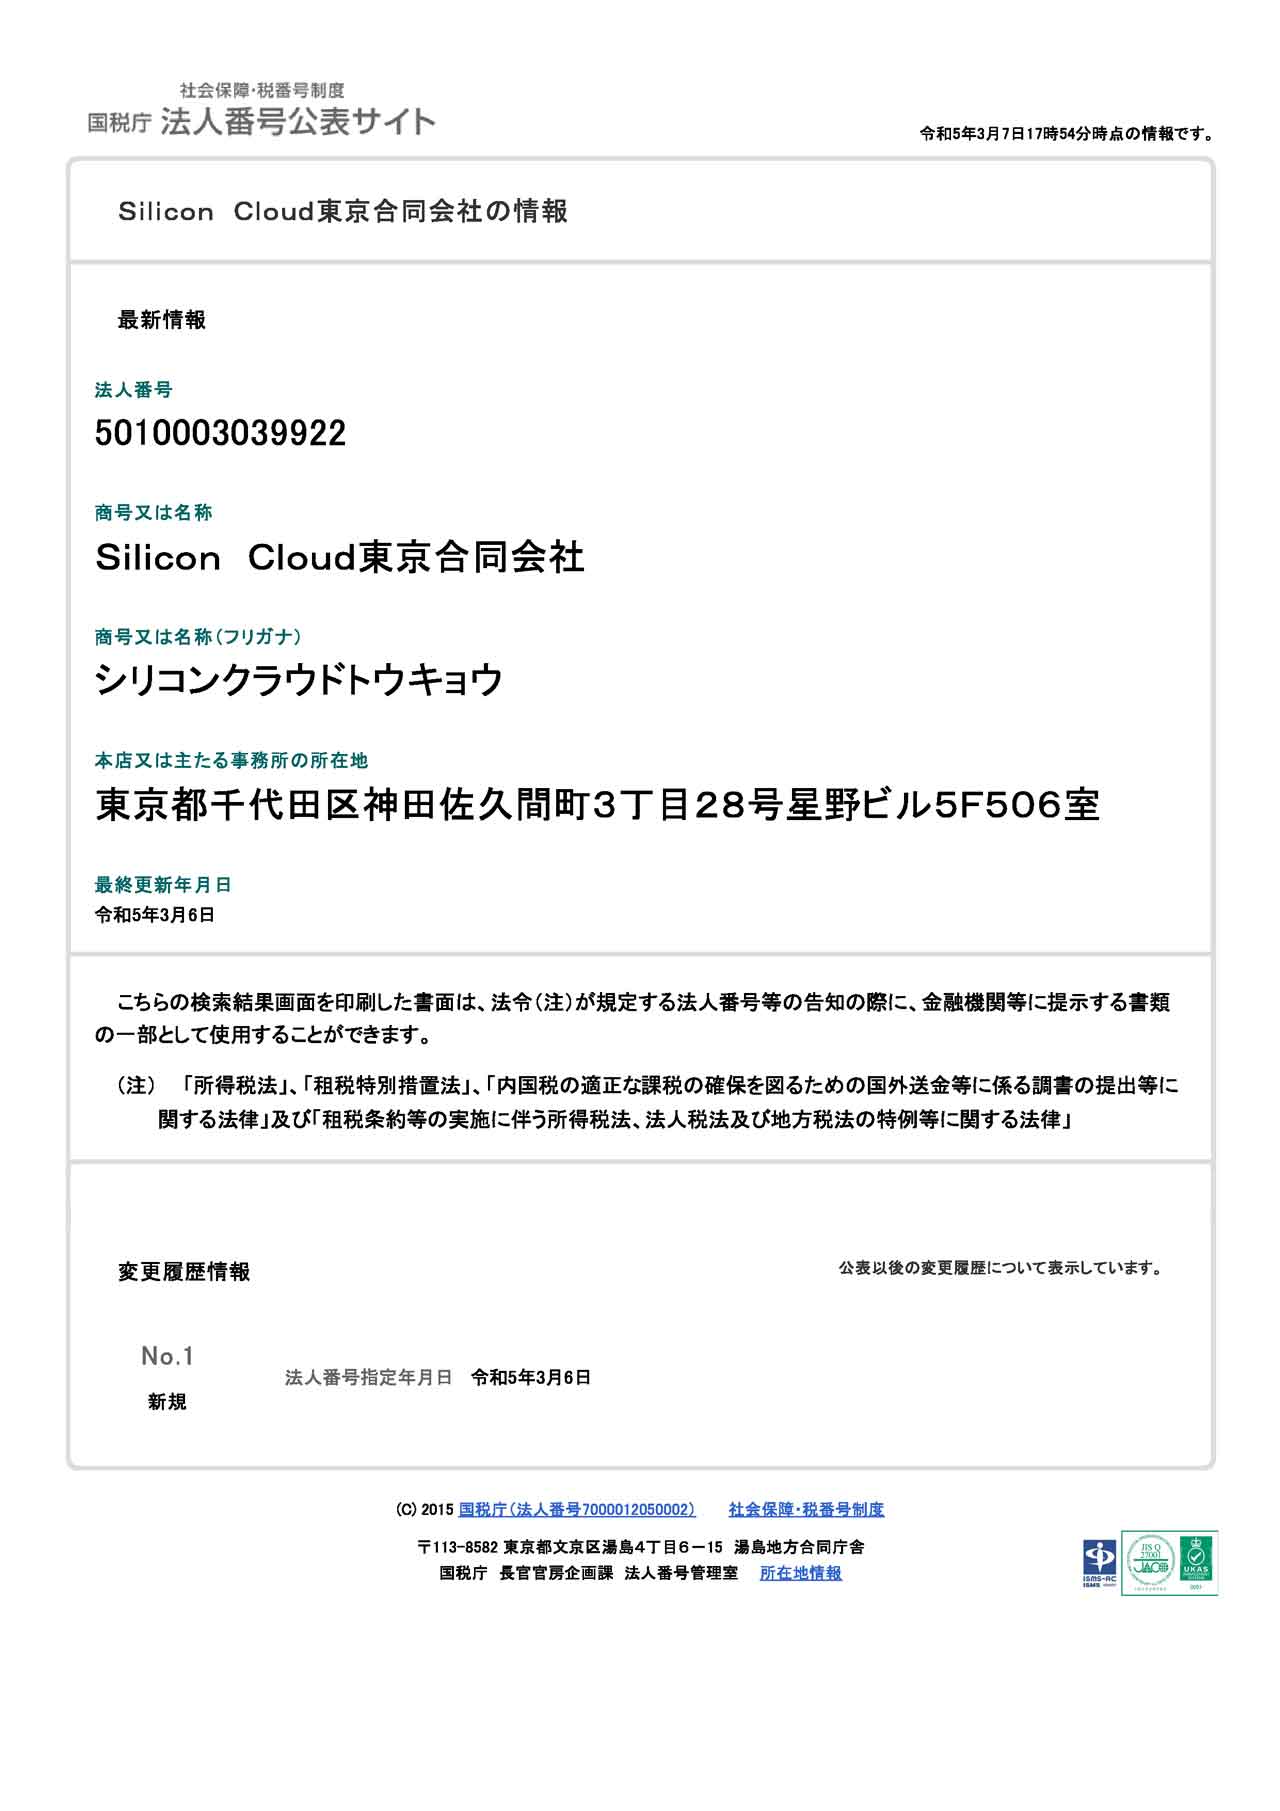 Silicon Cloud Tokyo LLC